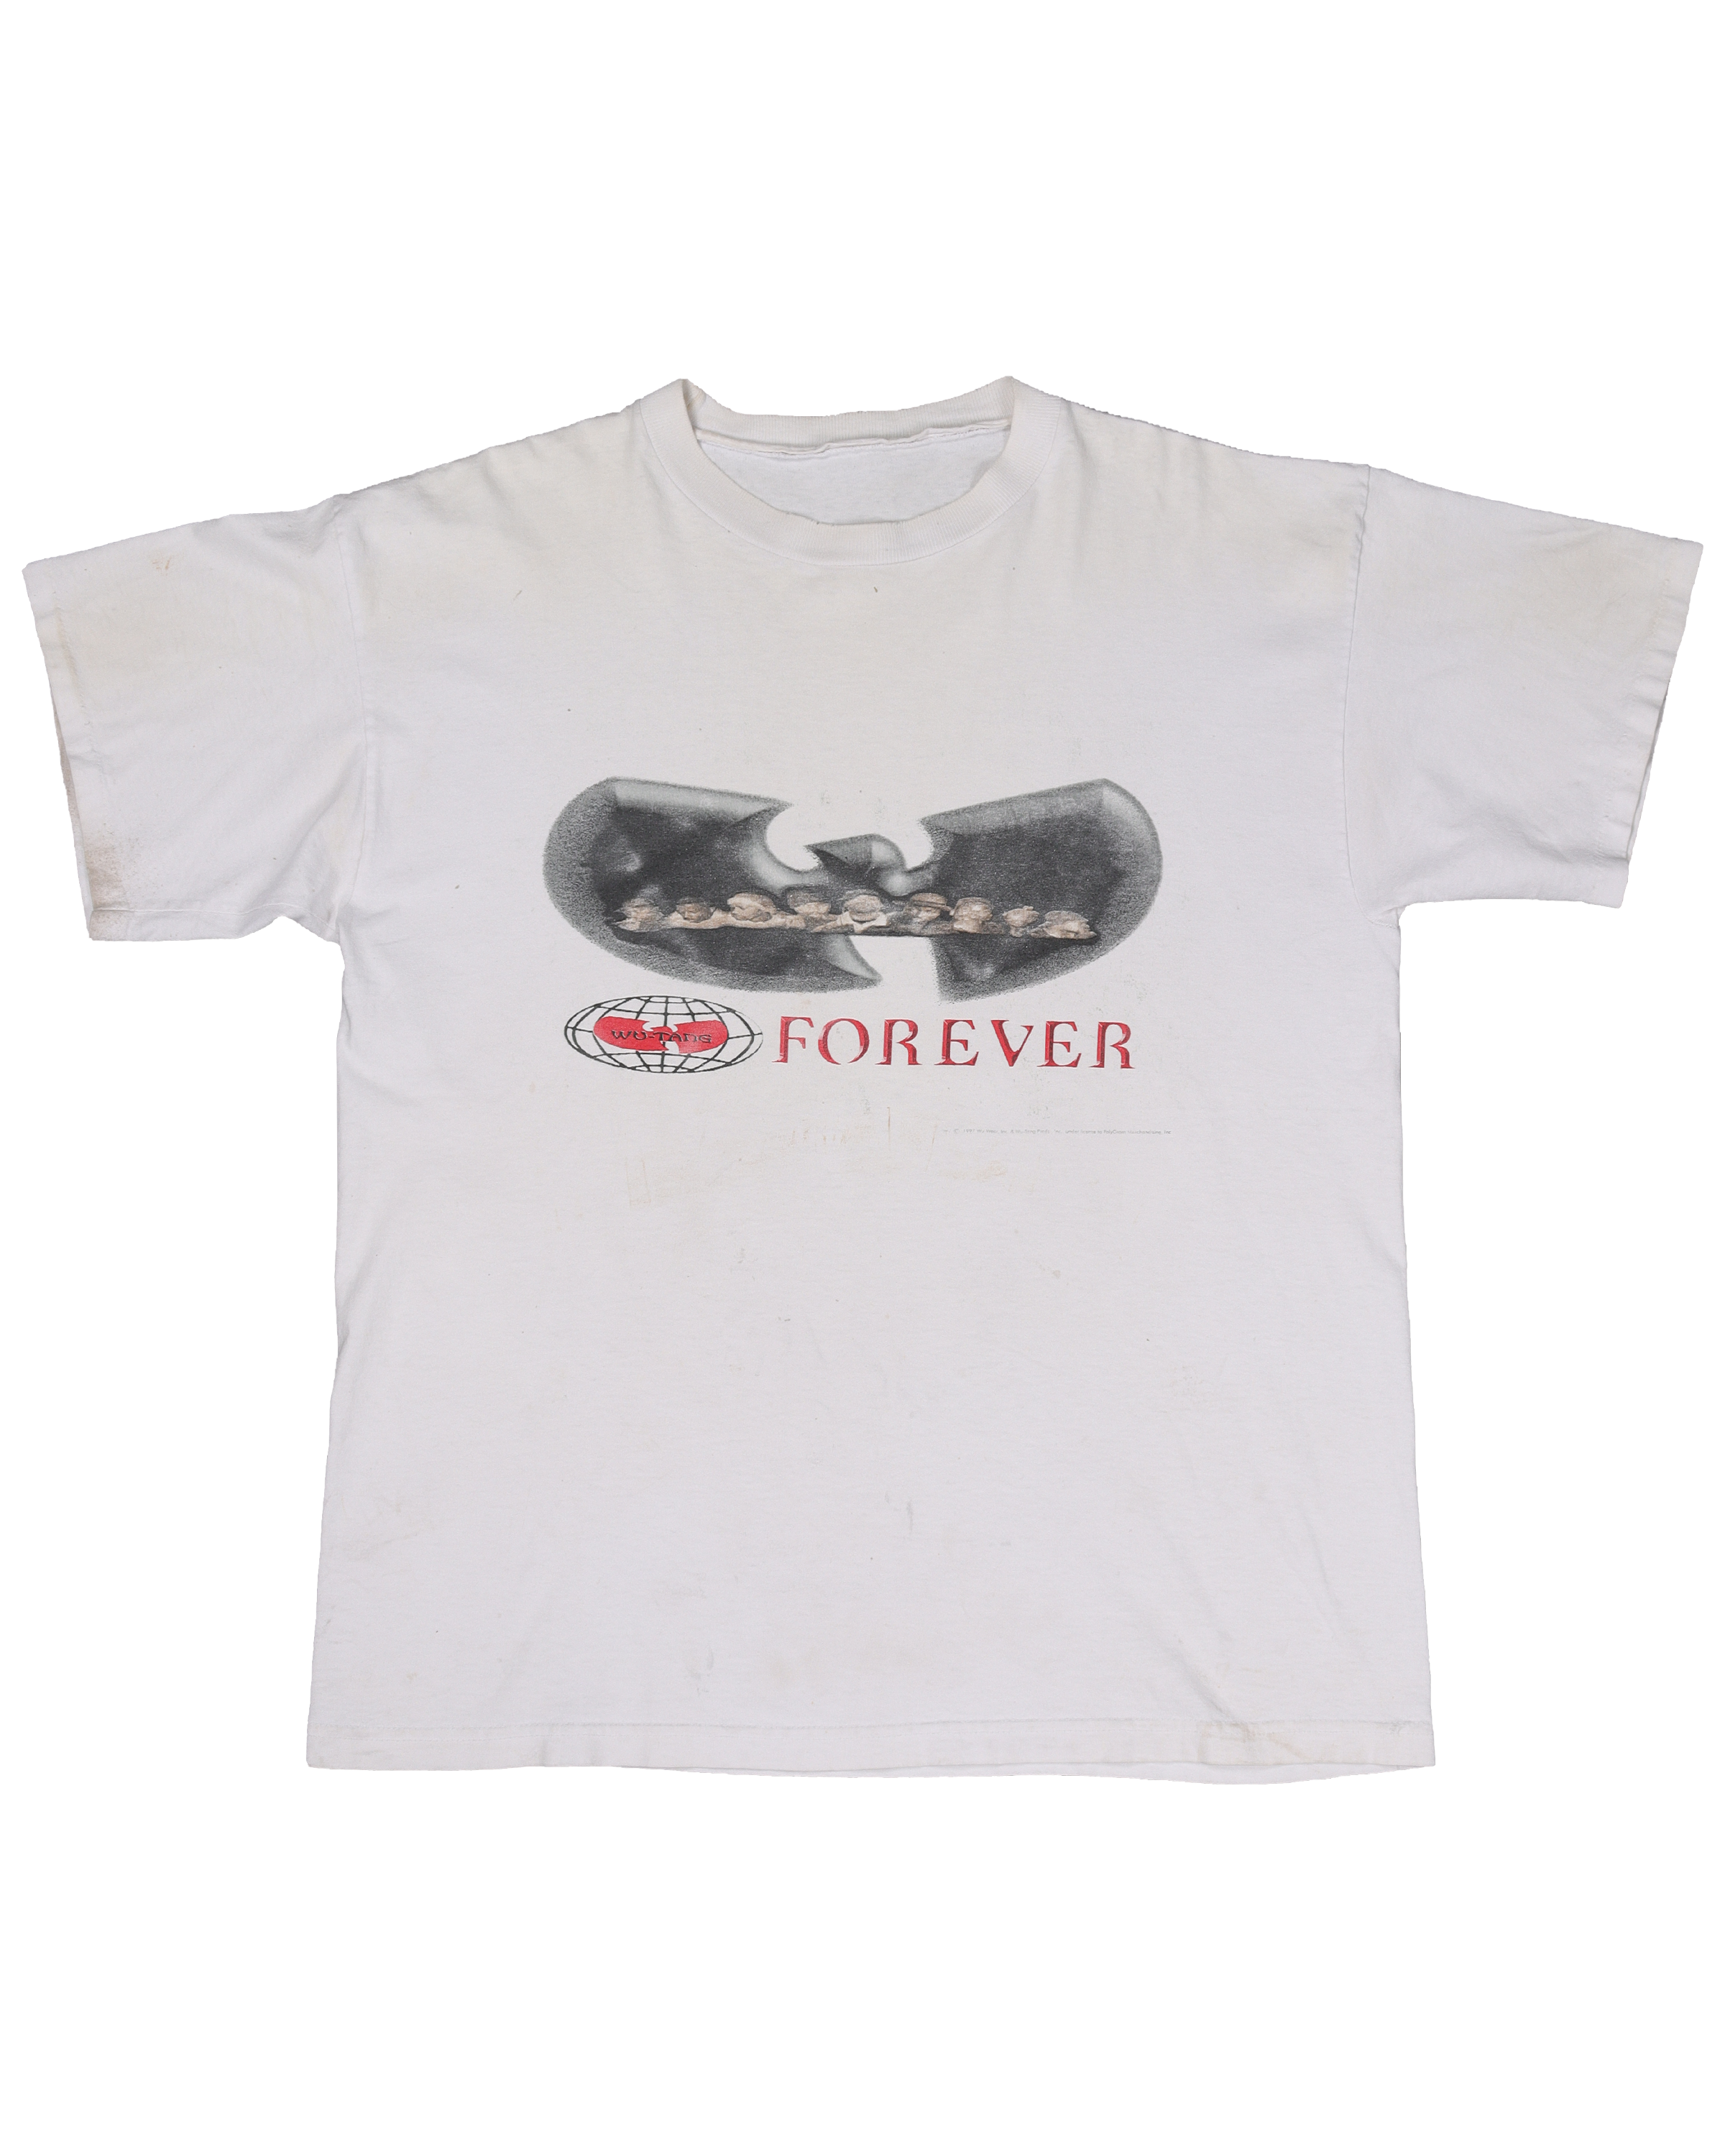 Wu-Tang Clan 'Forever" Promo T-Shirt